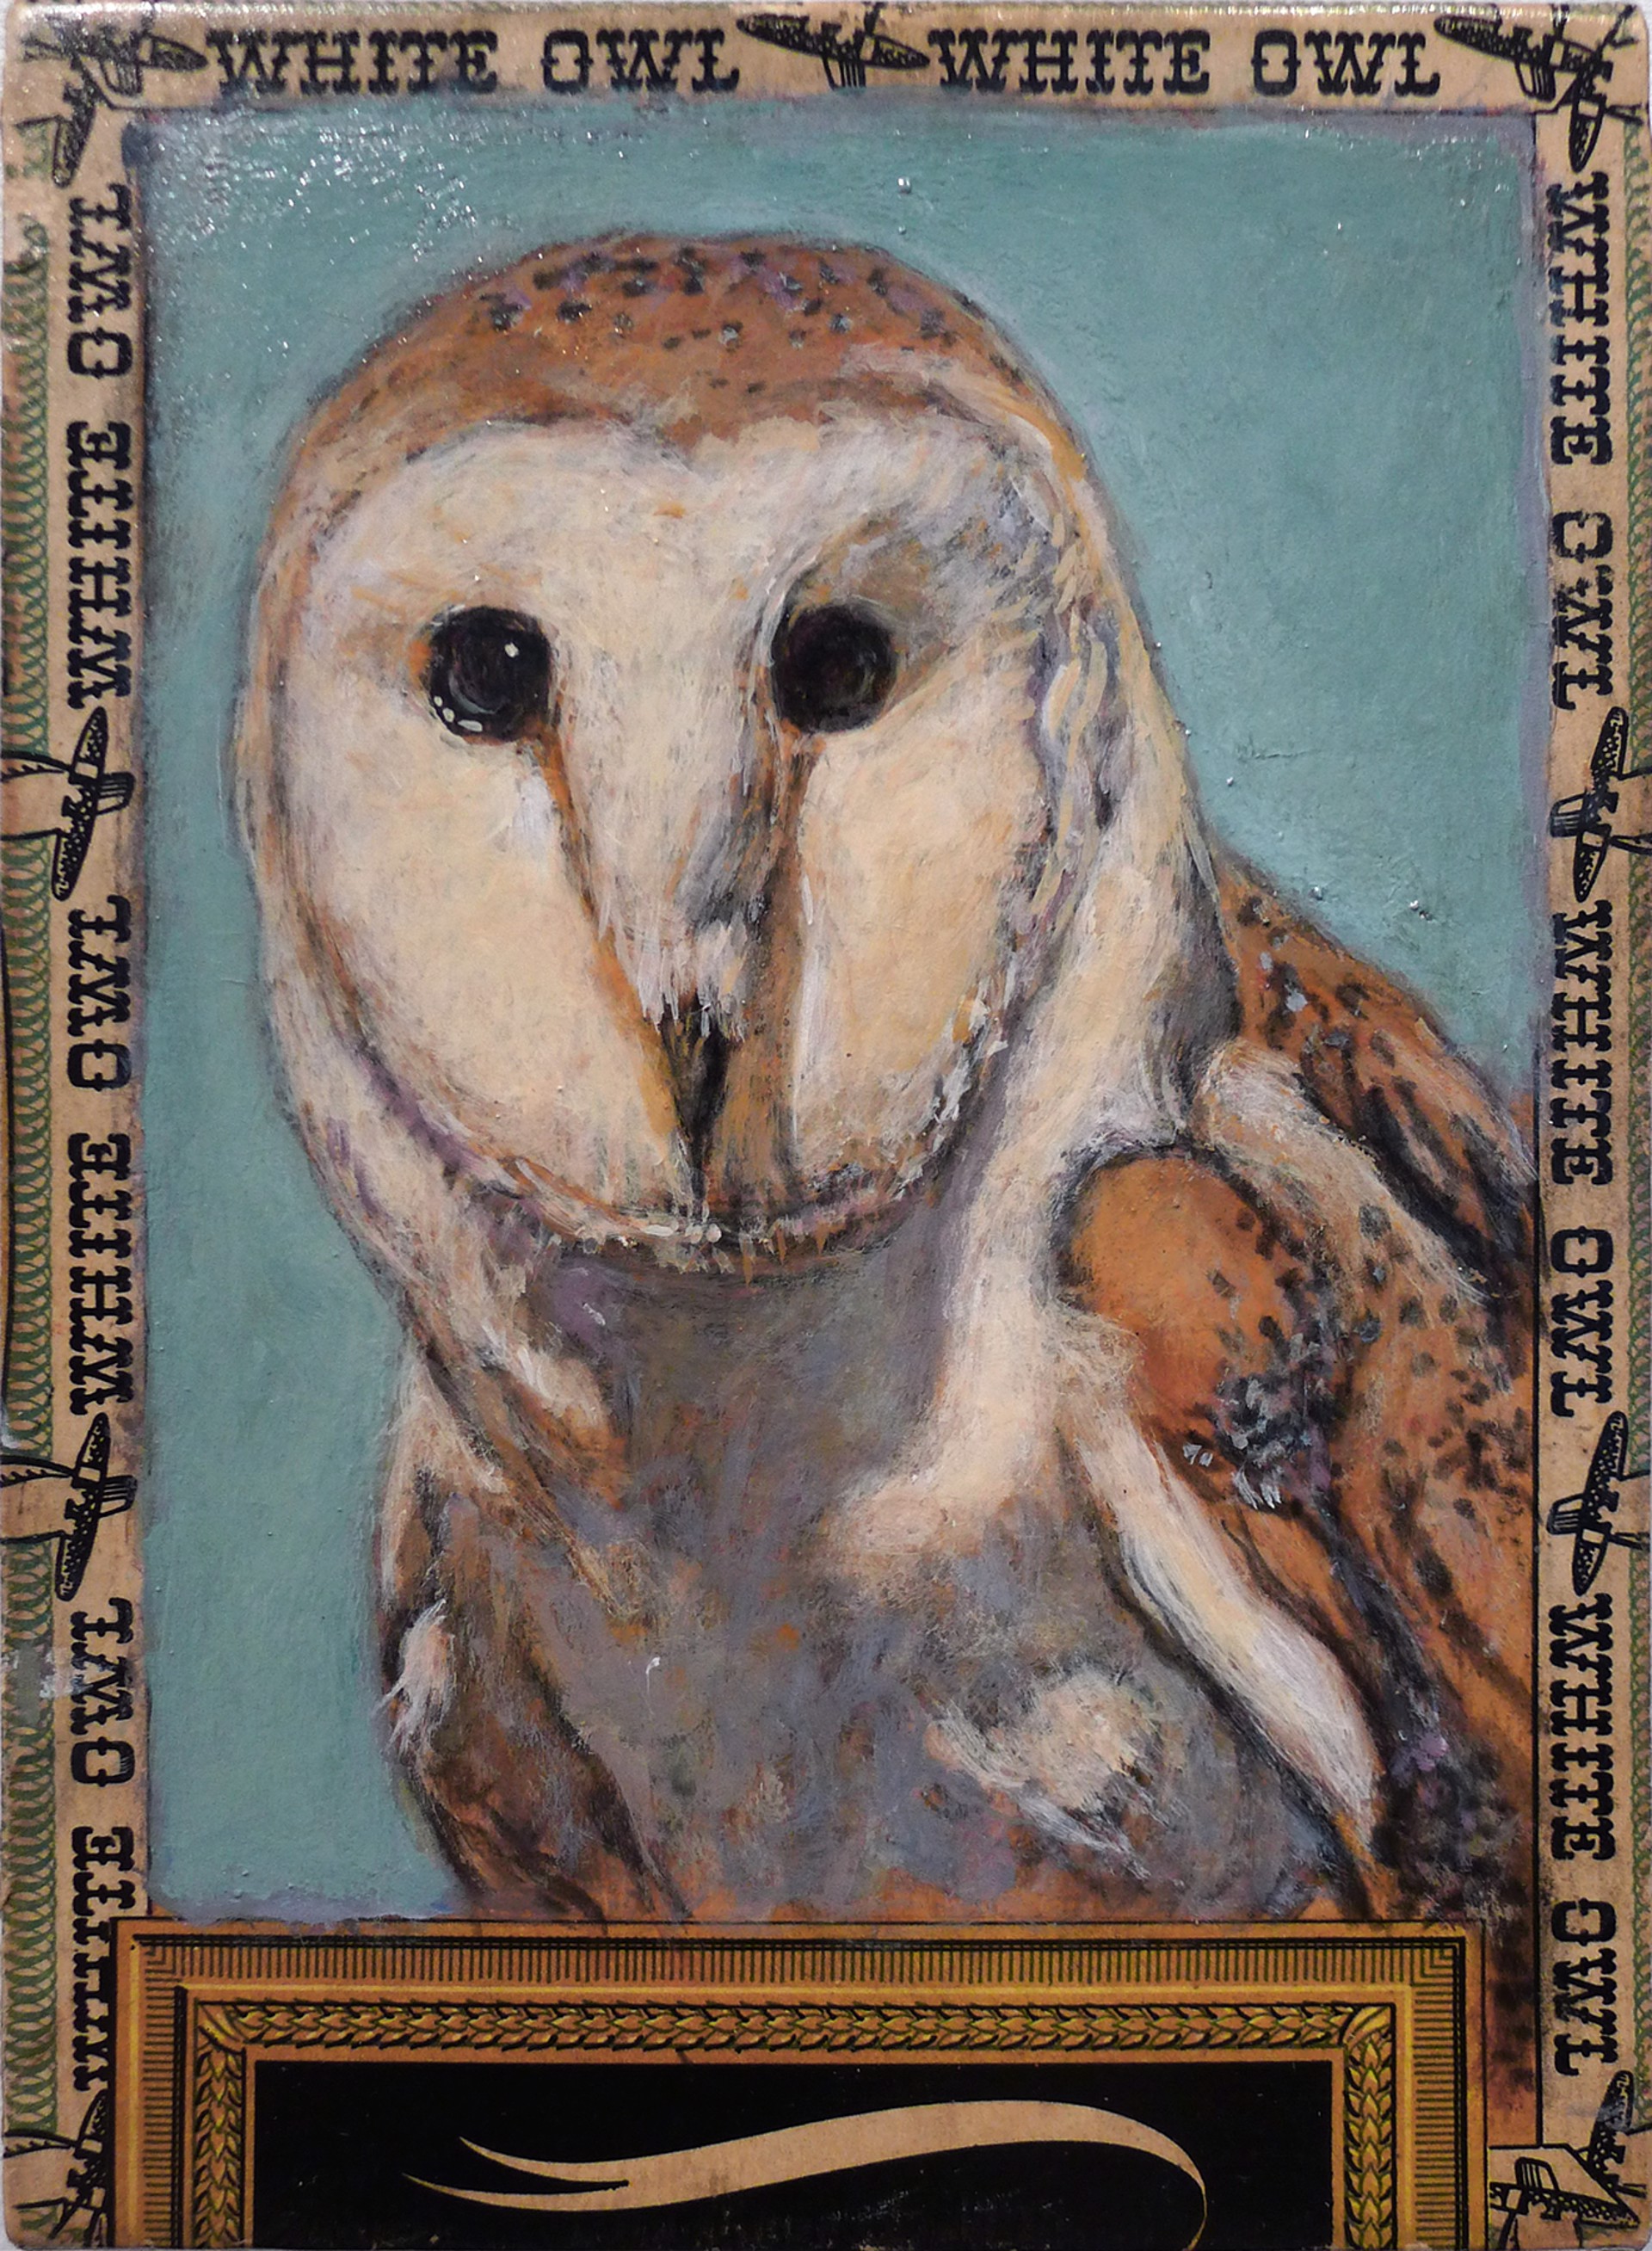 Barn Owl / White Owl by Ed Musante